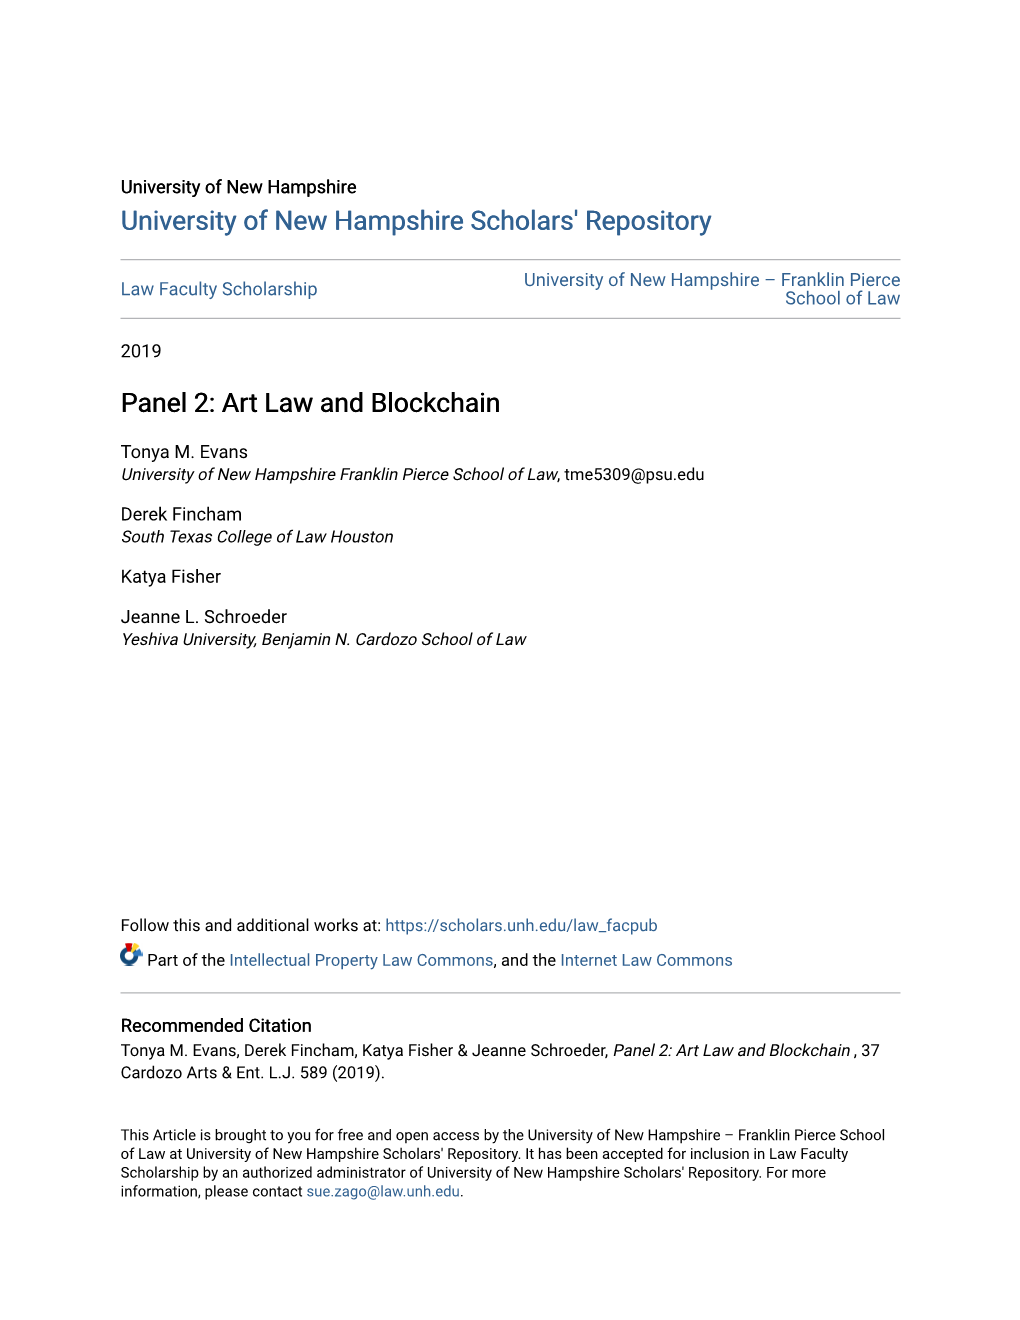 Art Law and Blockchain